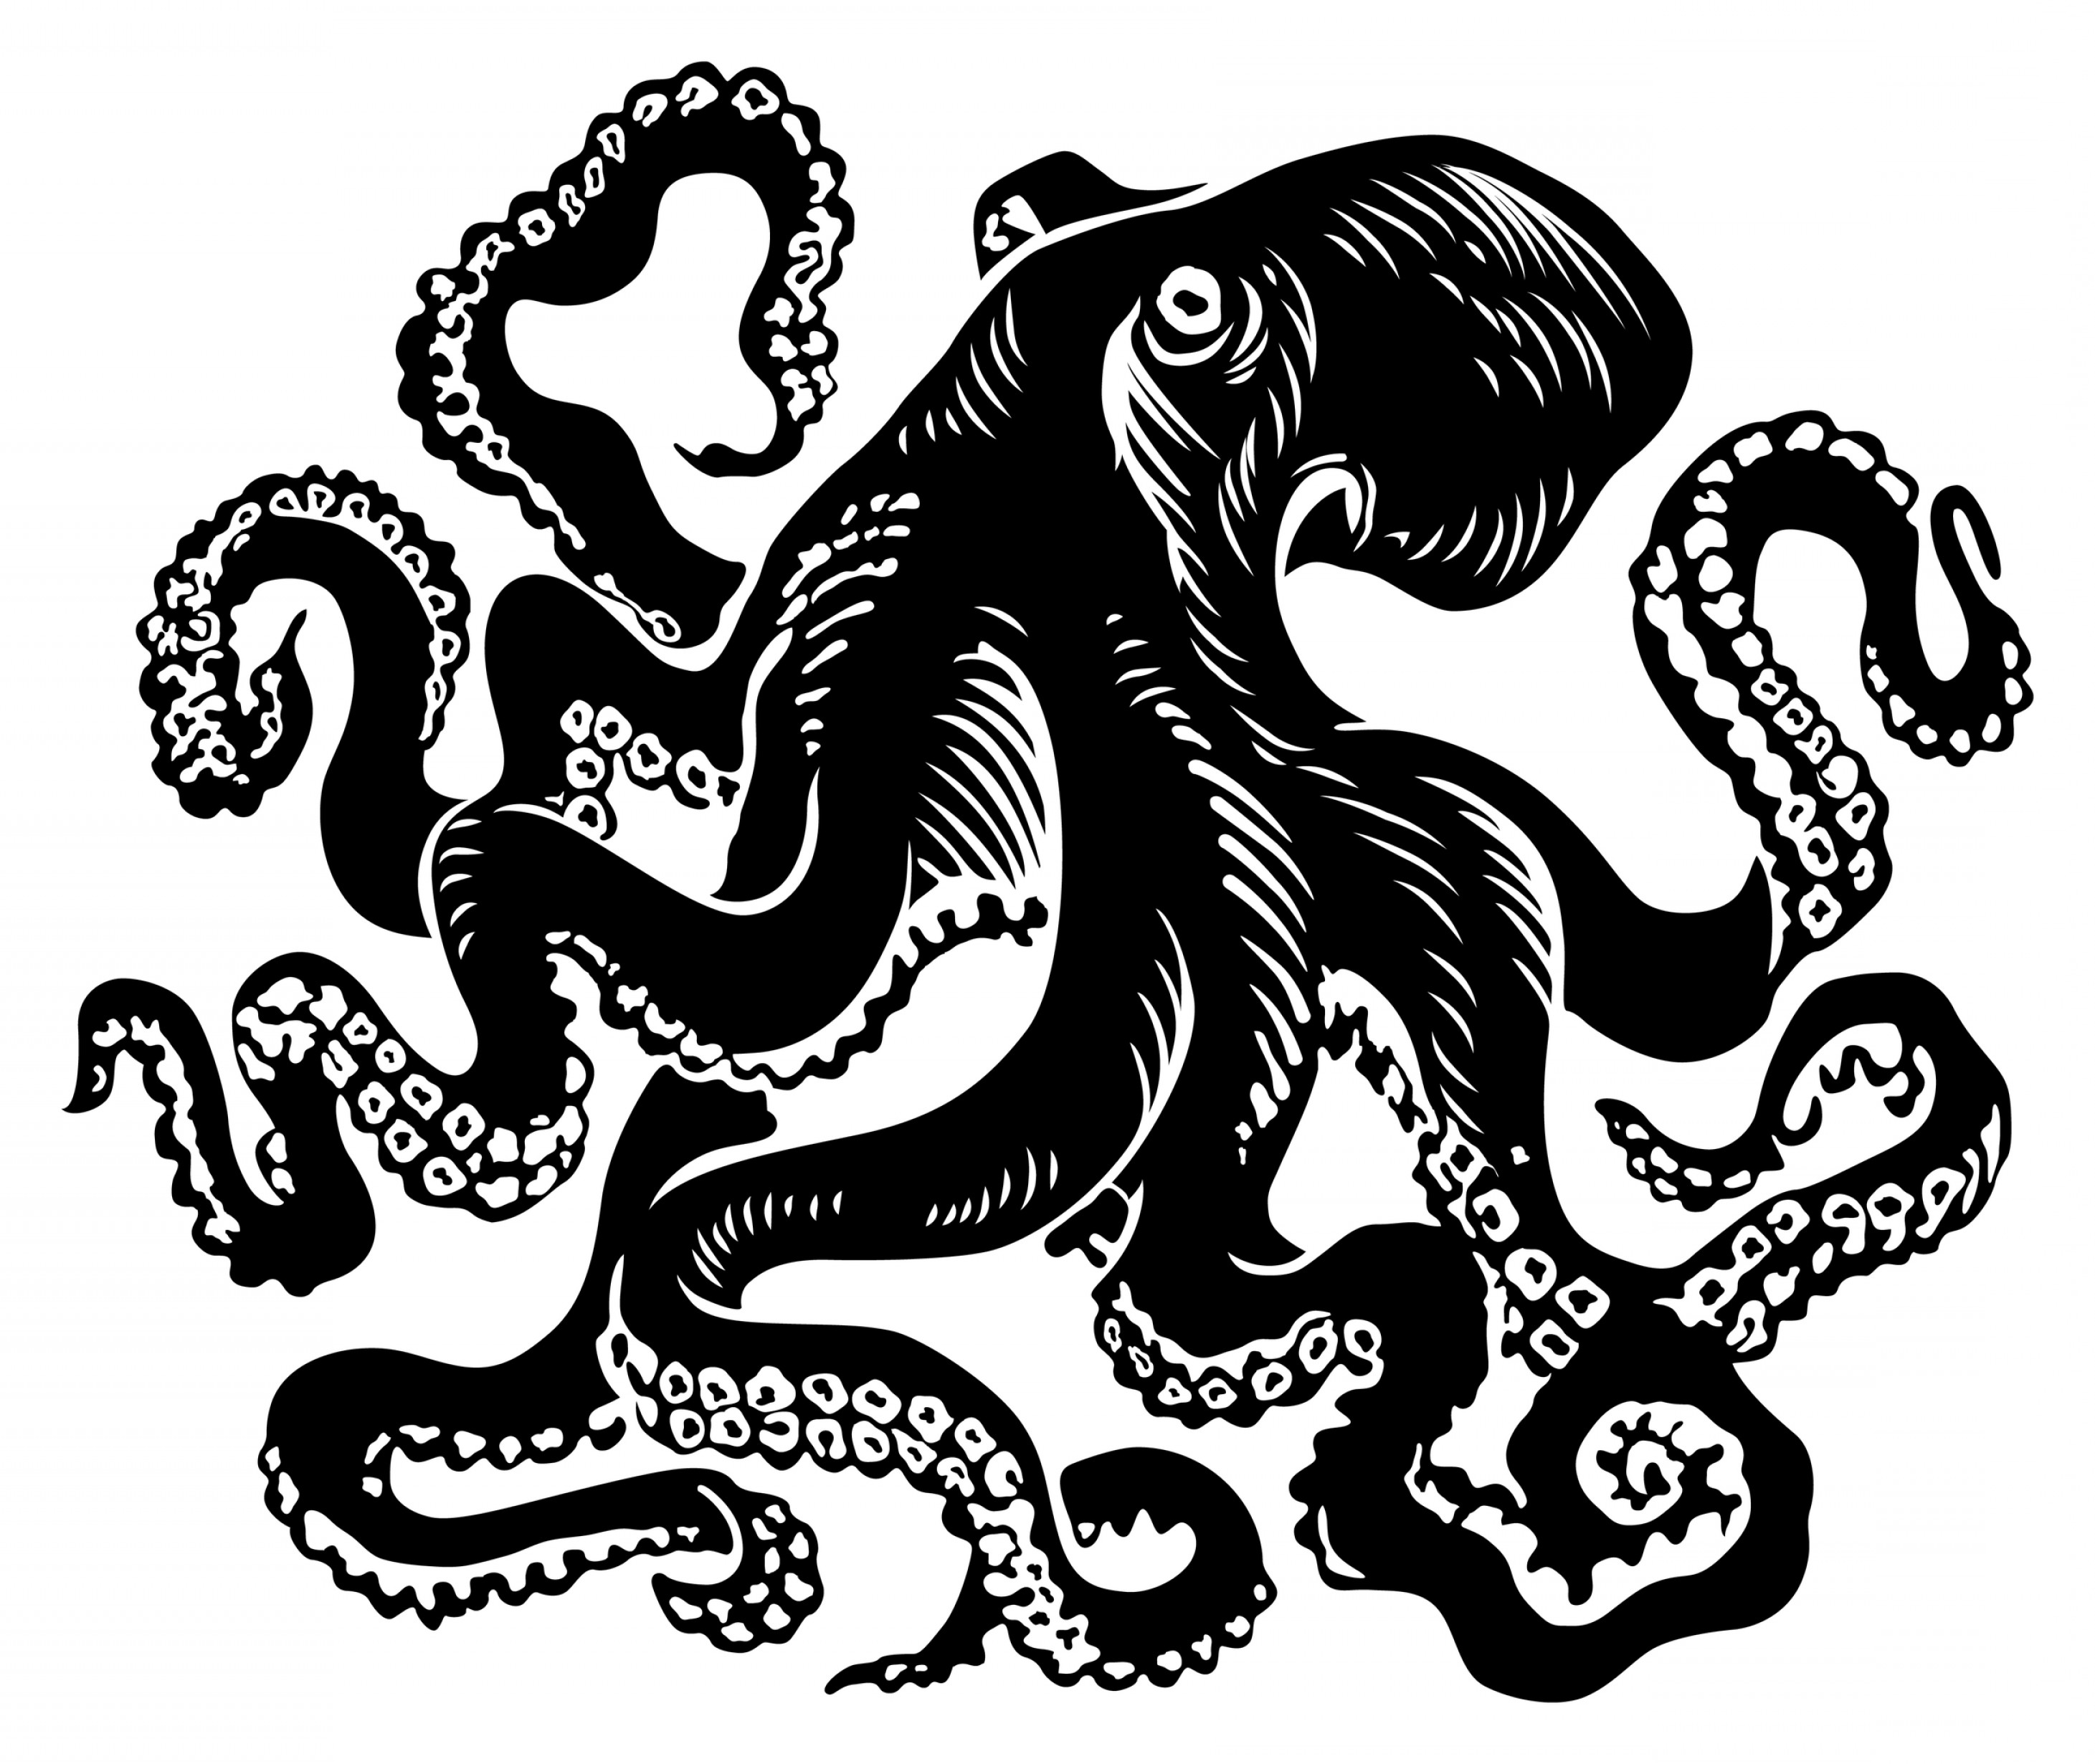 The Octopus: A Mixed-up Wonder